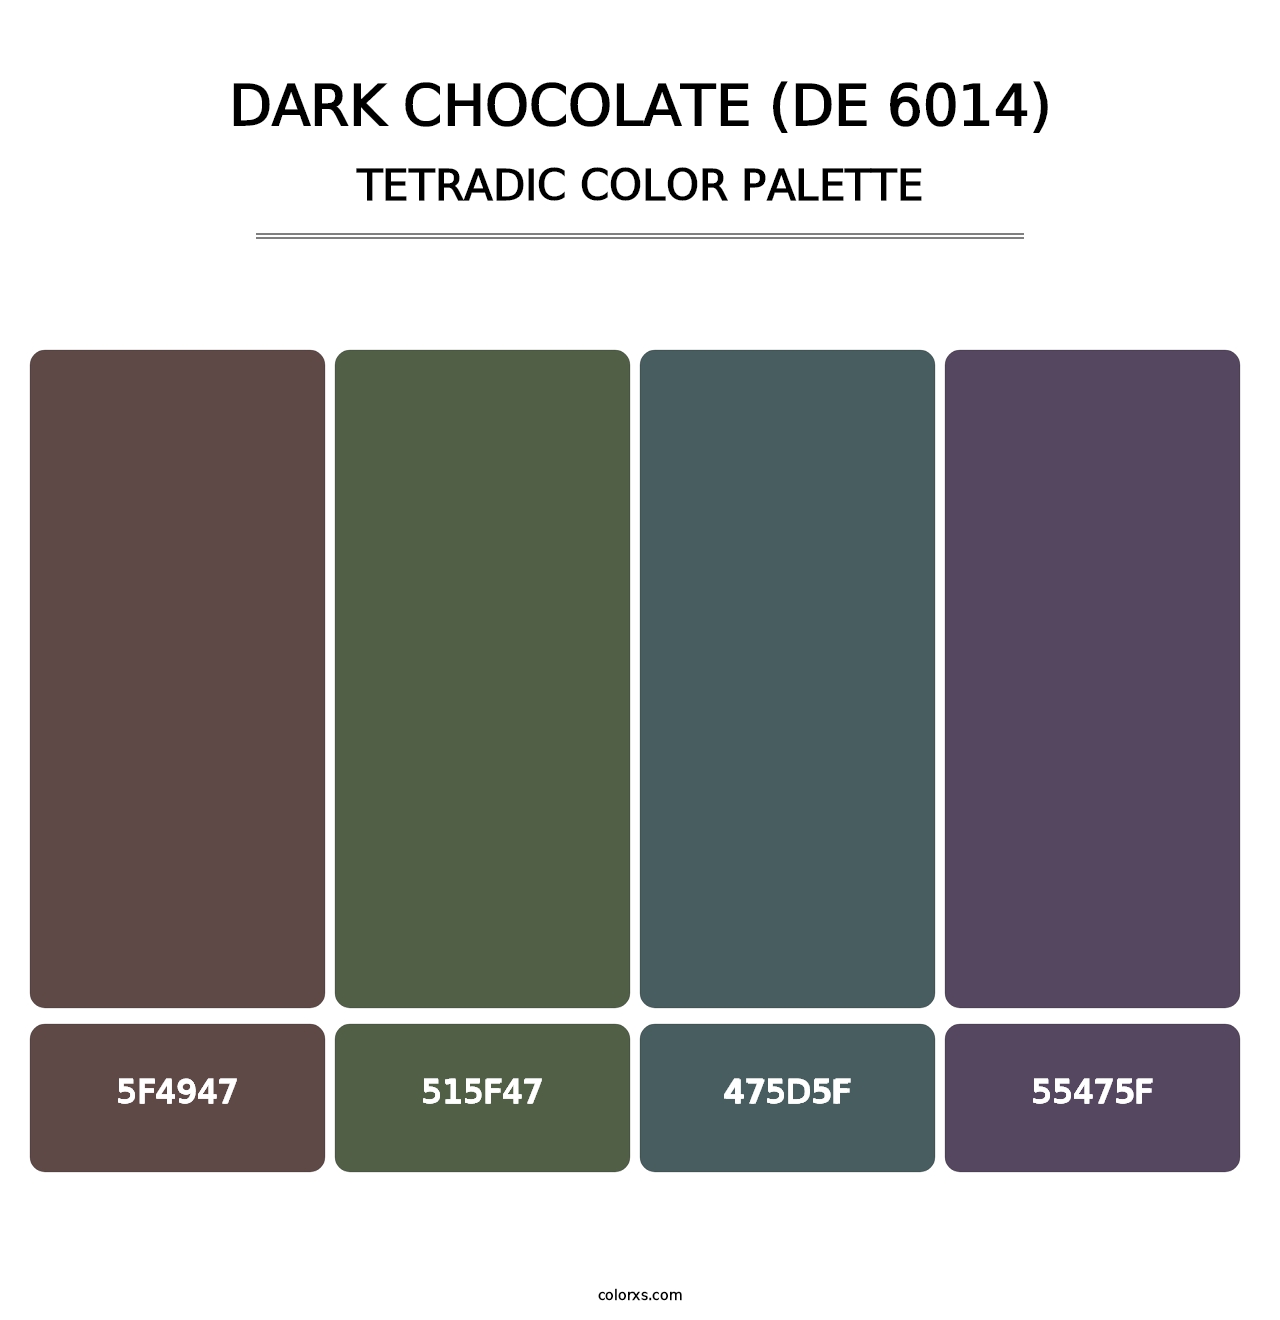 Dark Chocolate (DE 6014) - Tetradic Color Palette